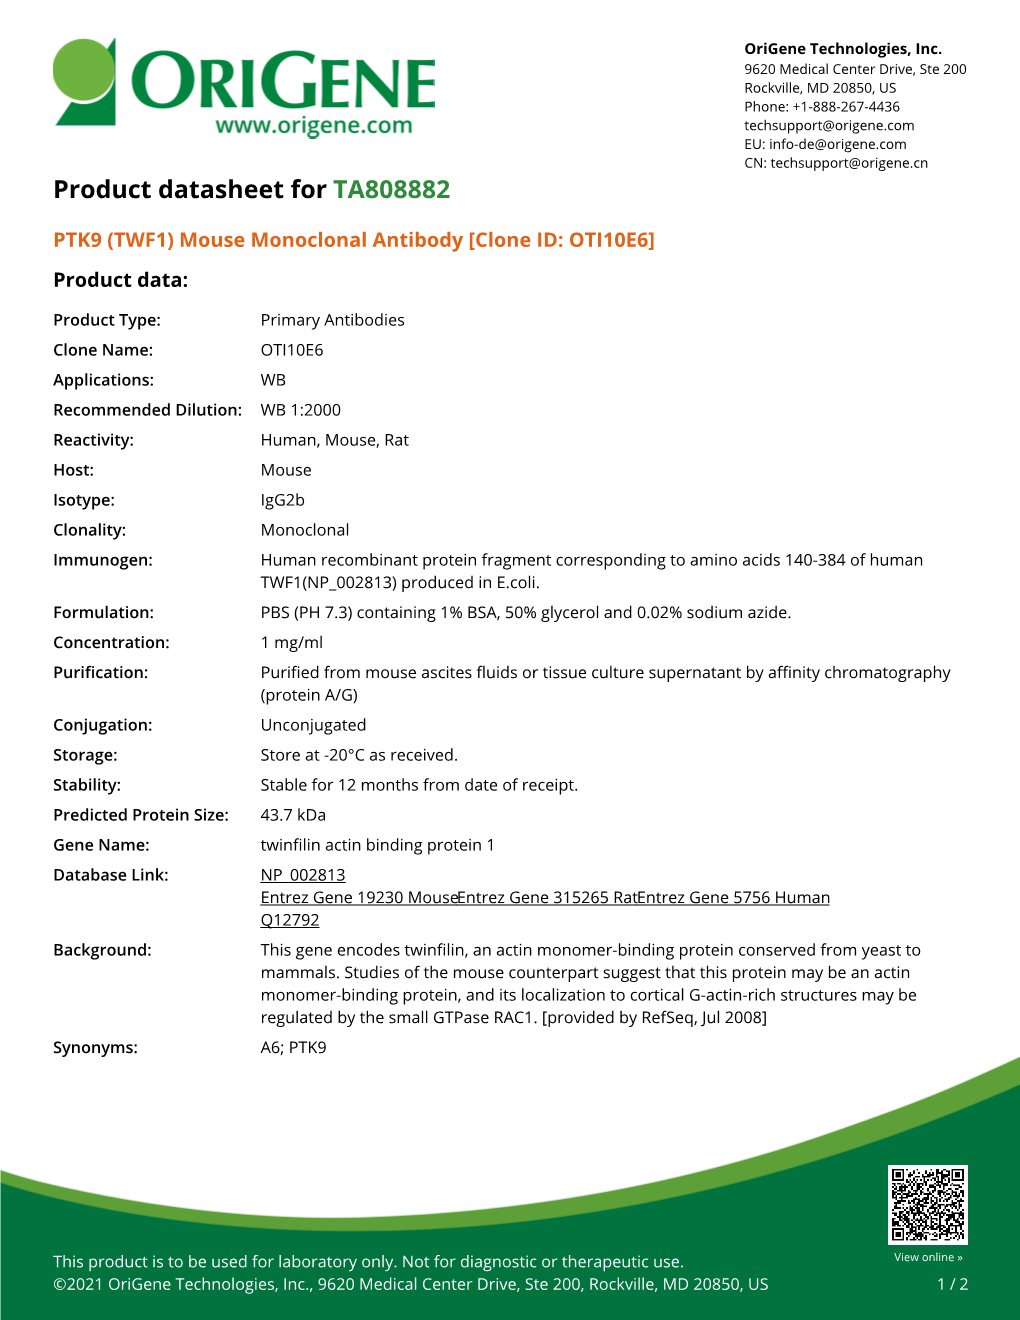 PTK9 (TWF1) Mouse Monoclonal Antibody [Clone ID: OTI10E6] Product Data